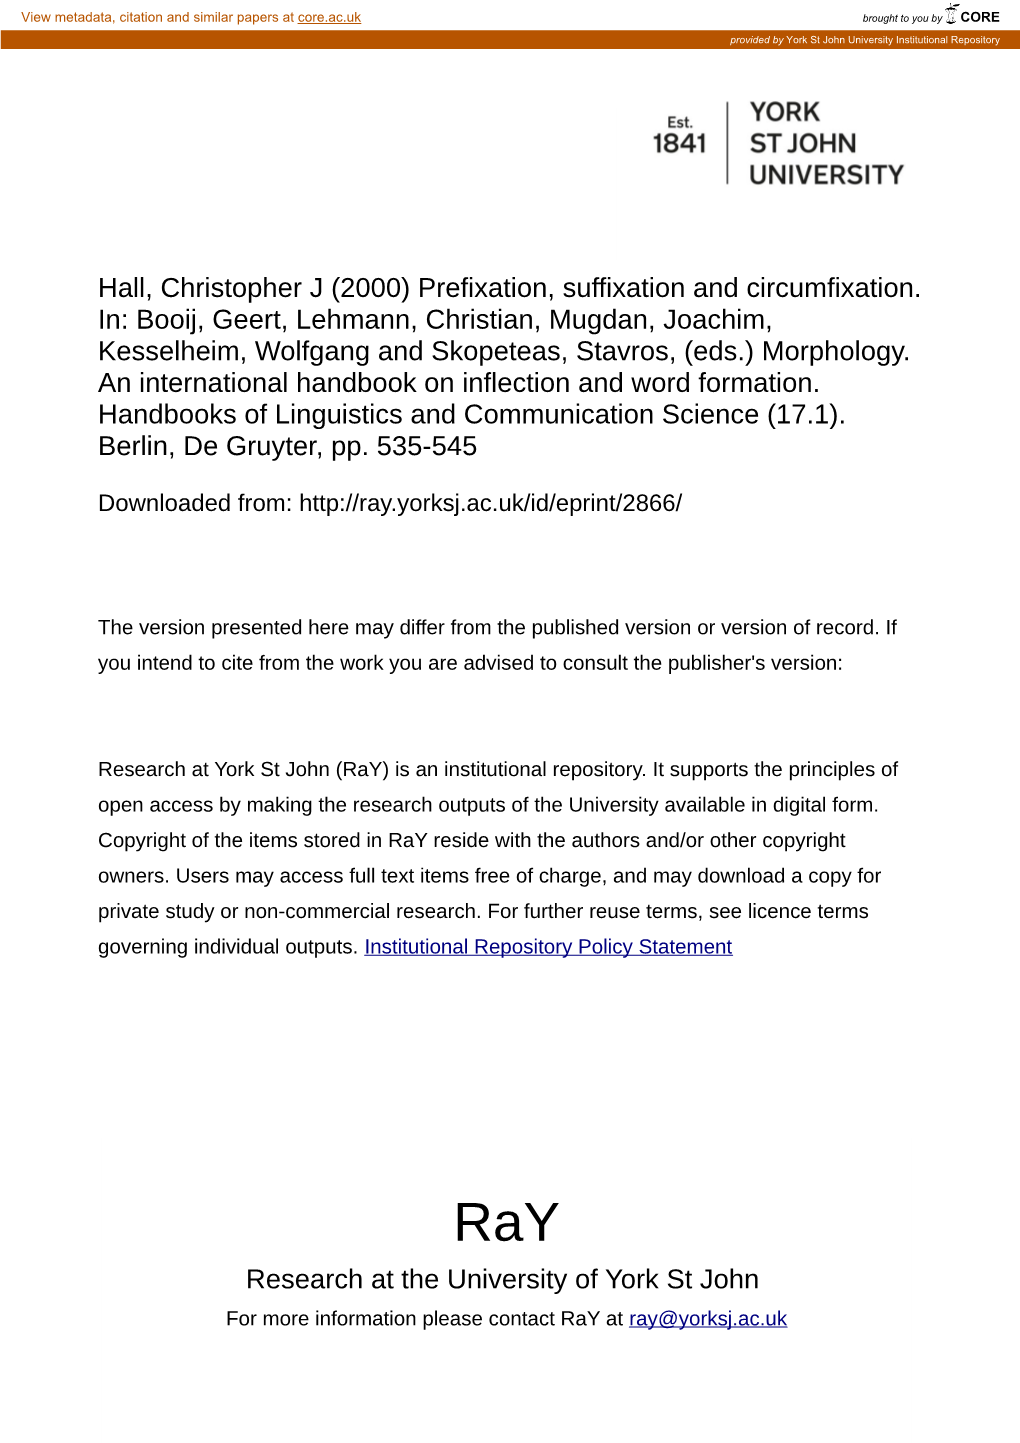 Hall, Christopher J (2000) Prefixation, Suffixation and Circumfixation. In: Booij, Geert, Lehmann, Christian, Mugdan, Joachim, K